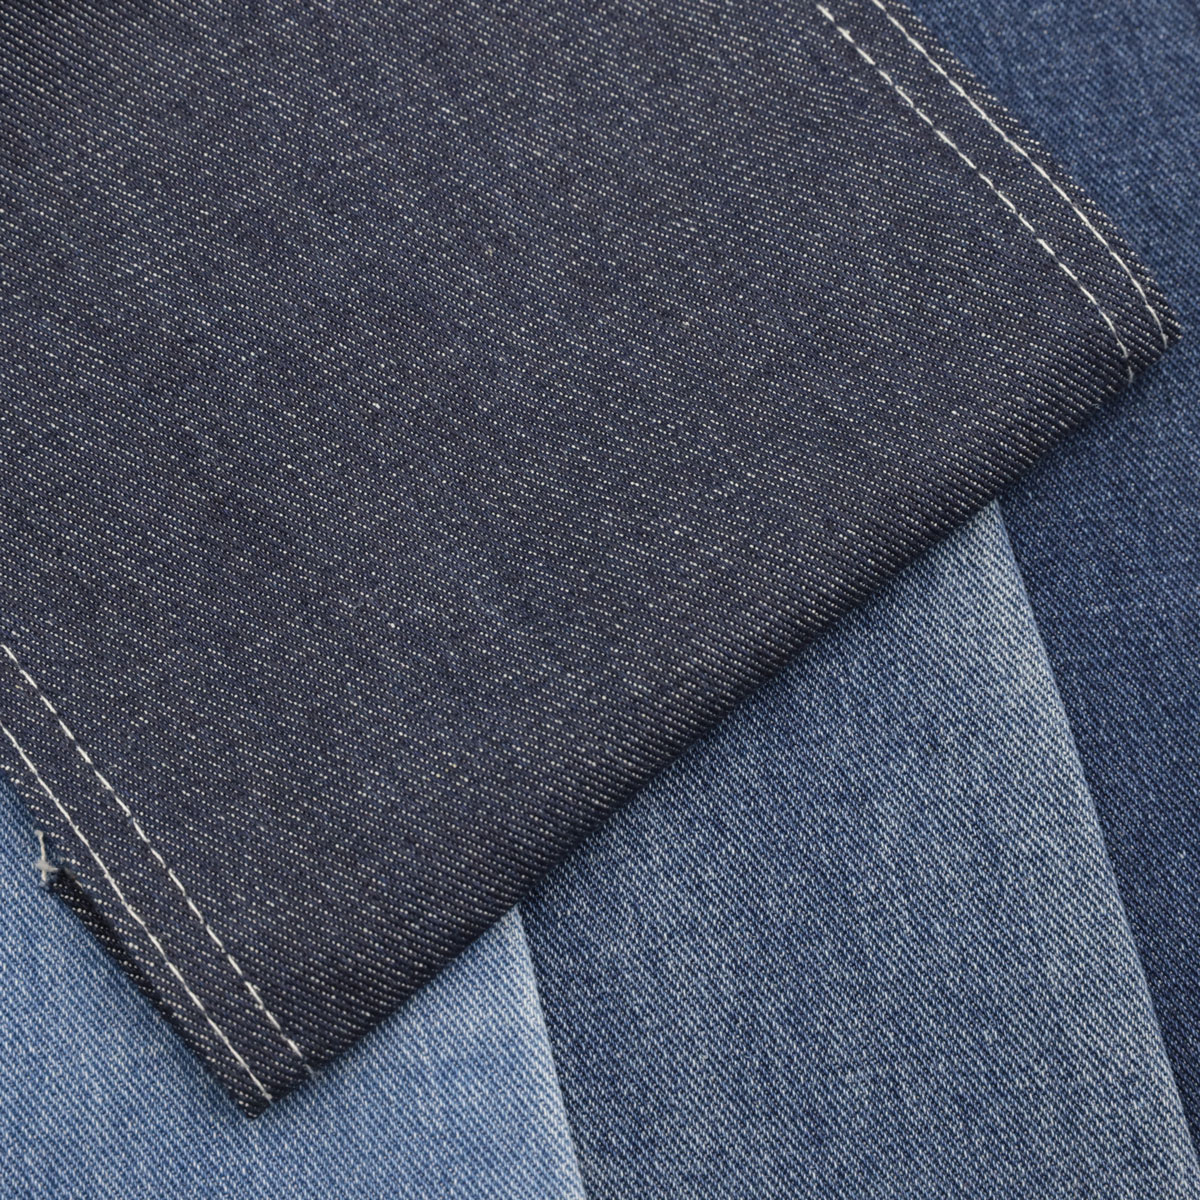 How to Make a Handmade Denim Jeans Material 2